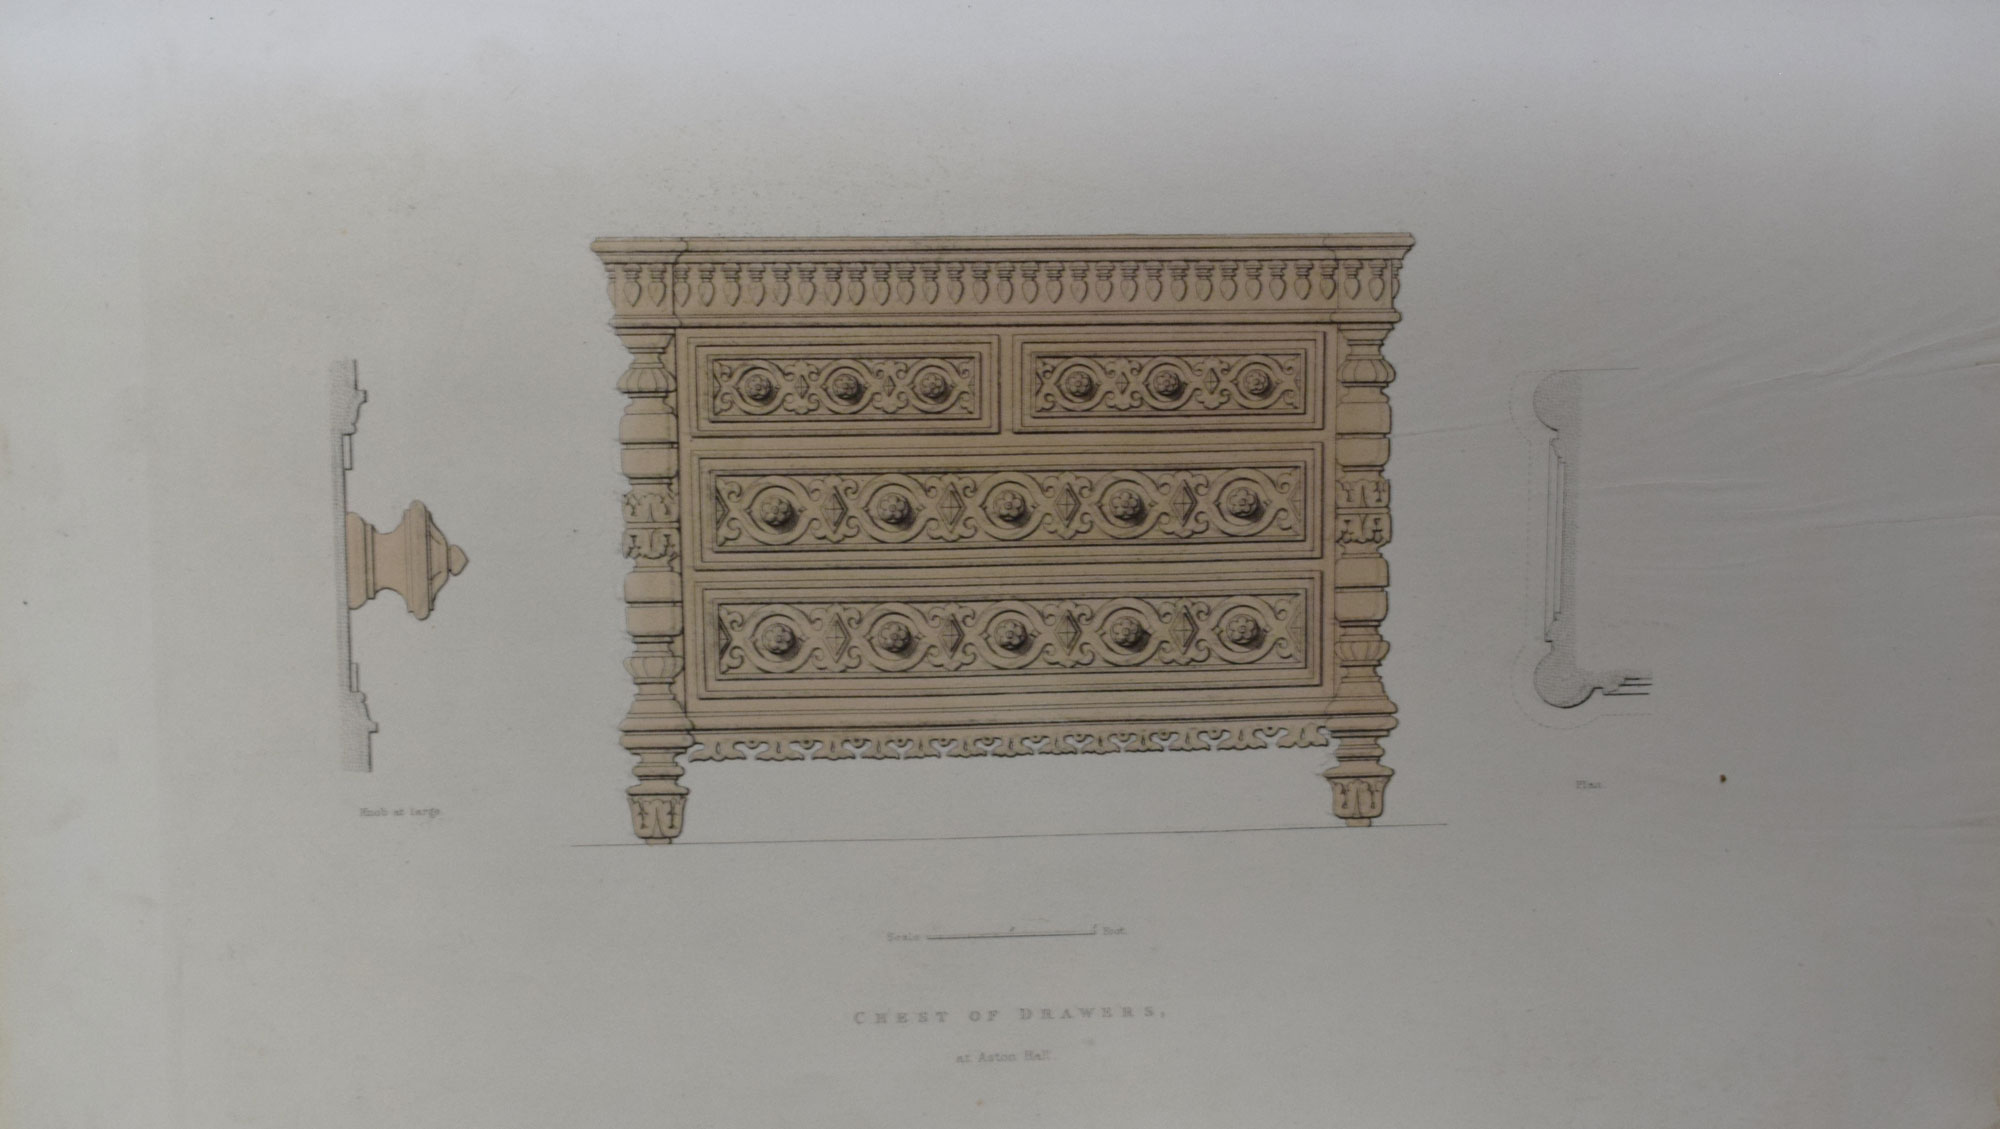 Furniture with Candelabra and Interior Decoration Designed by R. Bridgens